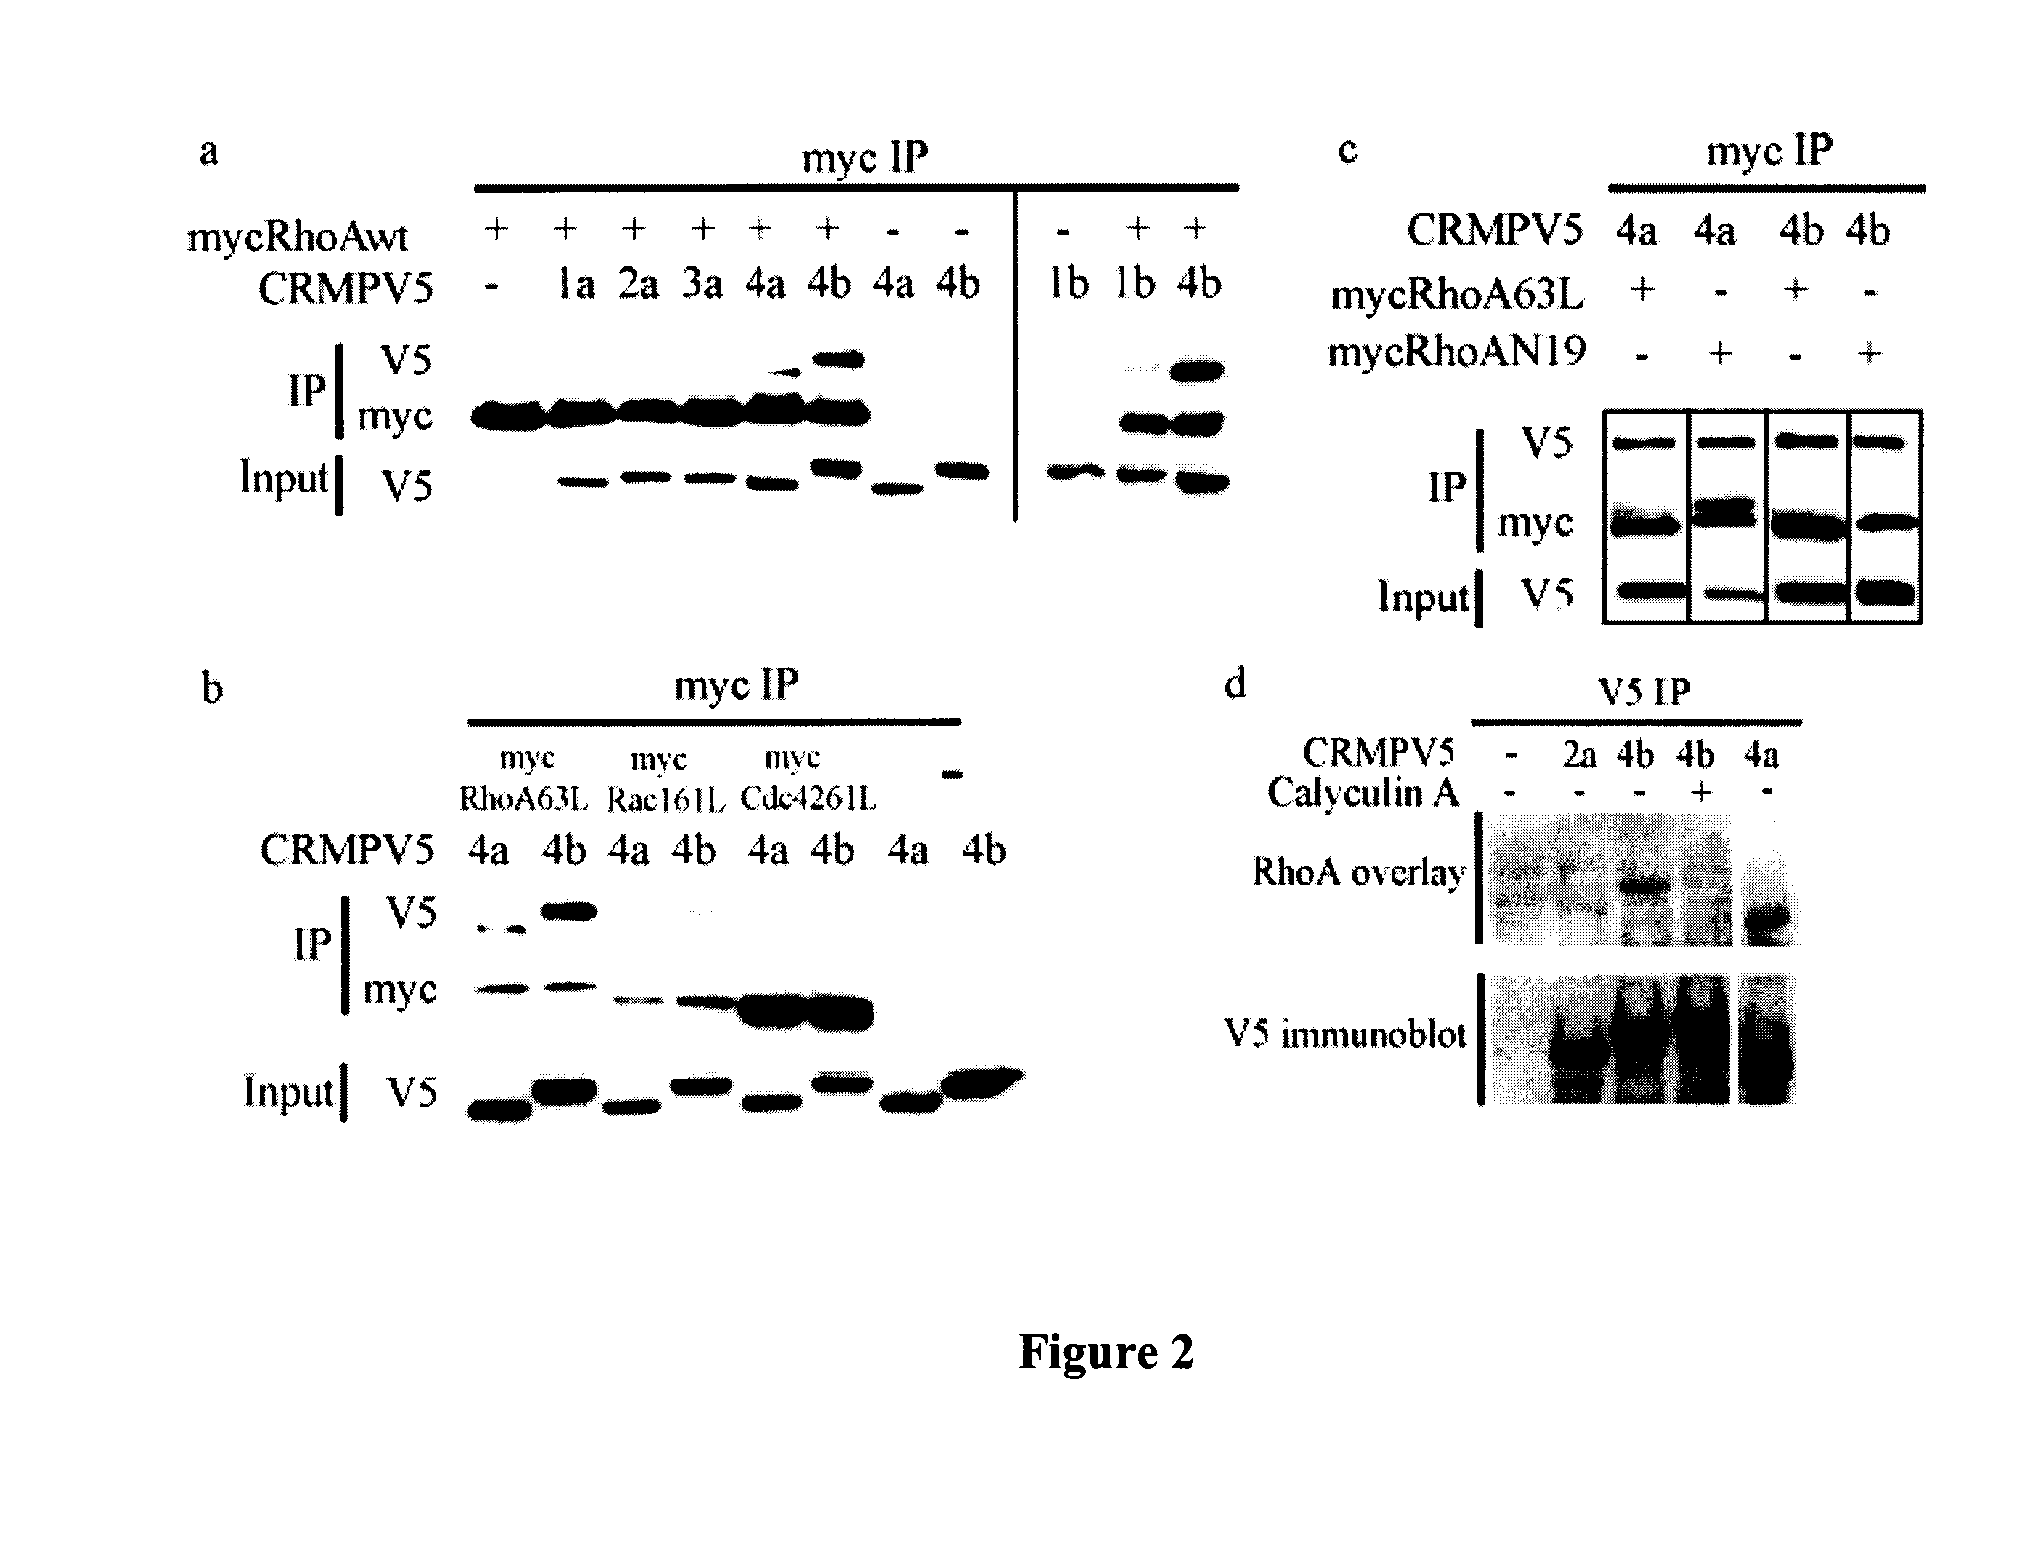 CRMP4b inhibitory peptide